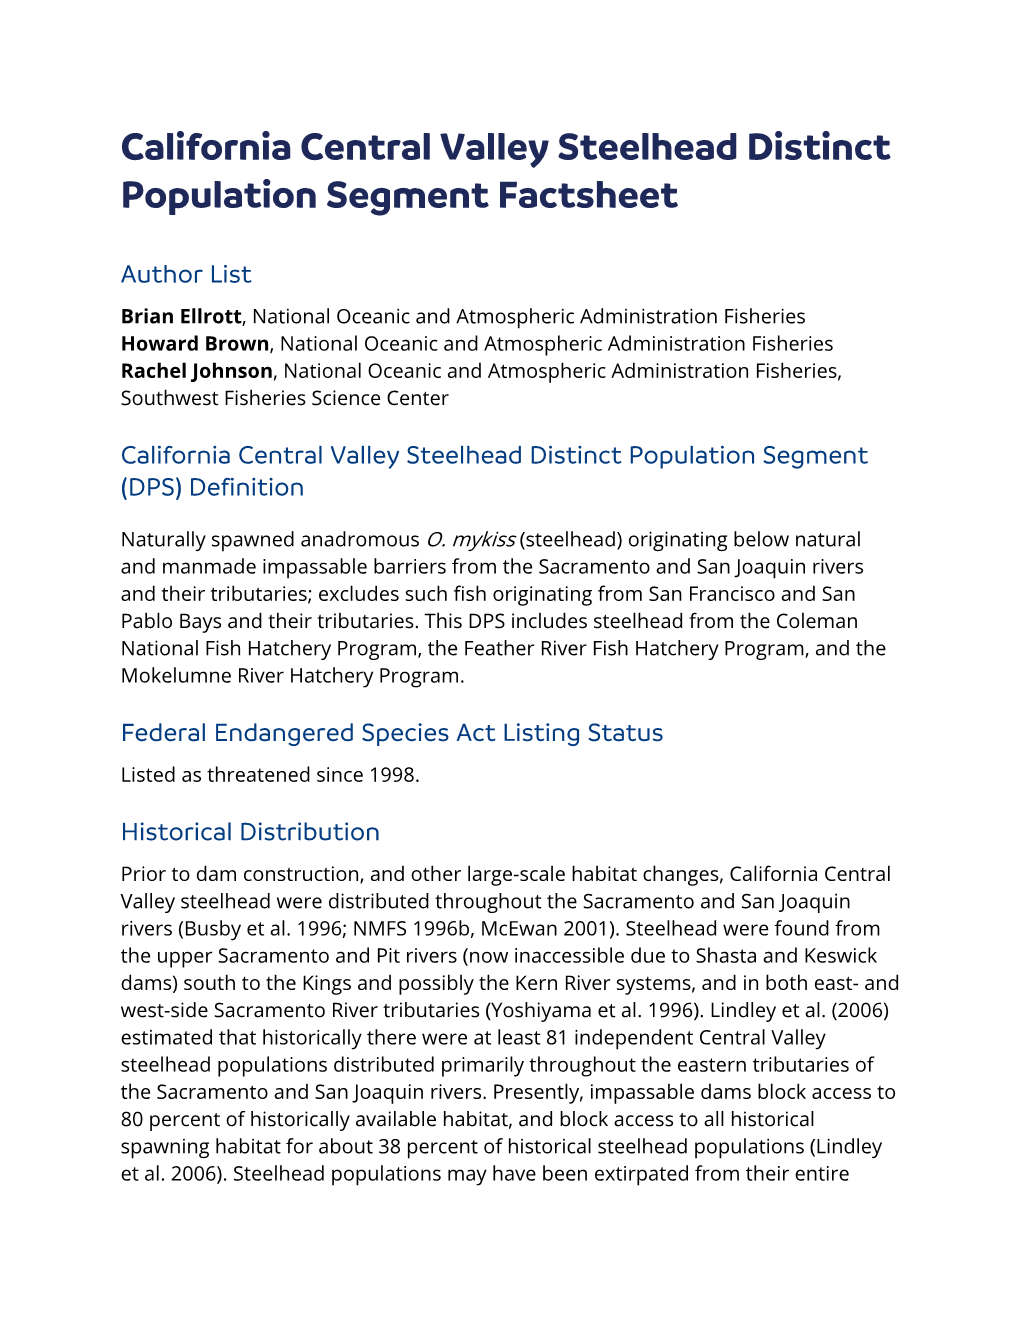 California Central Valley Steelhead Distinct Population Segment Factsheet